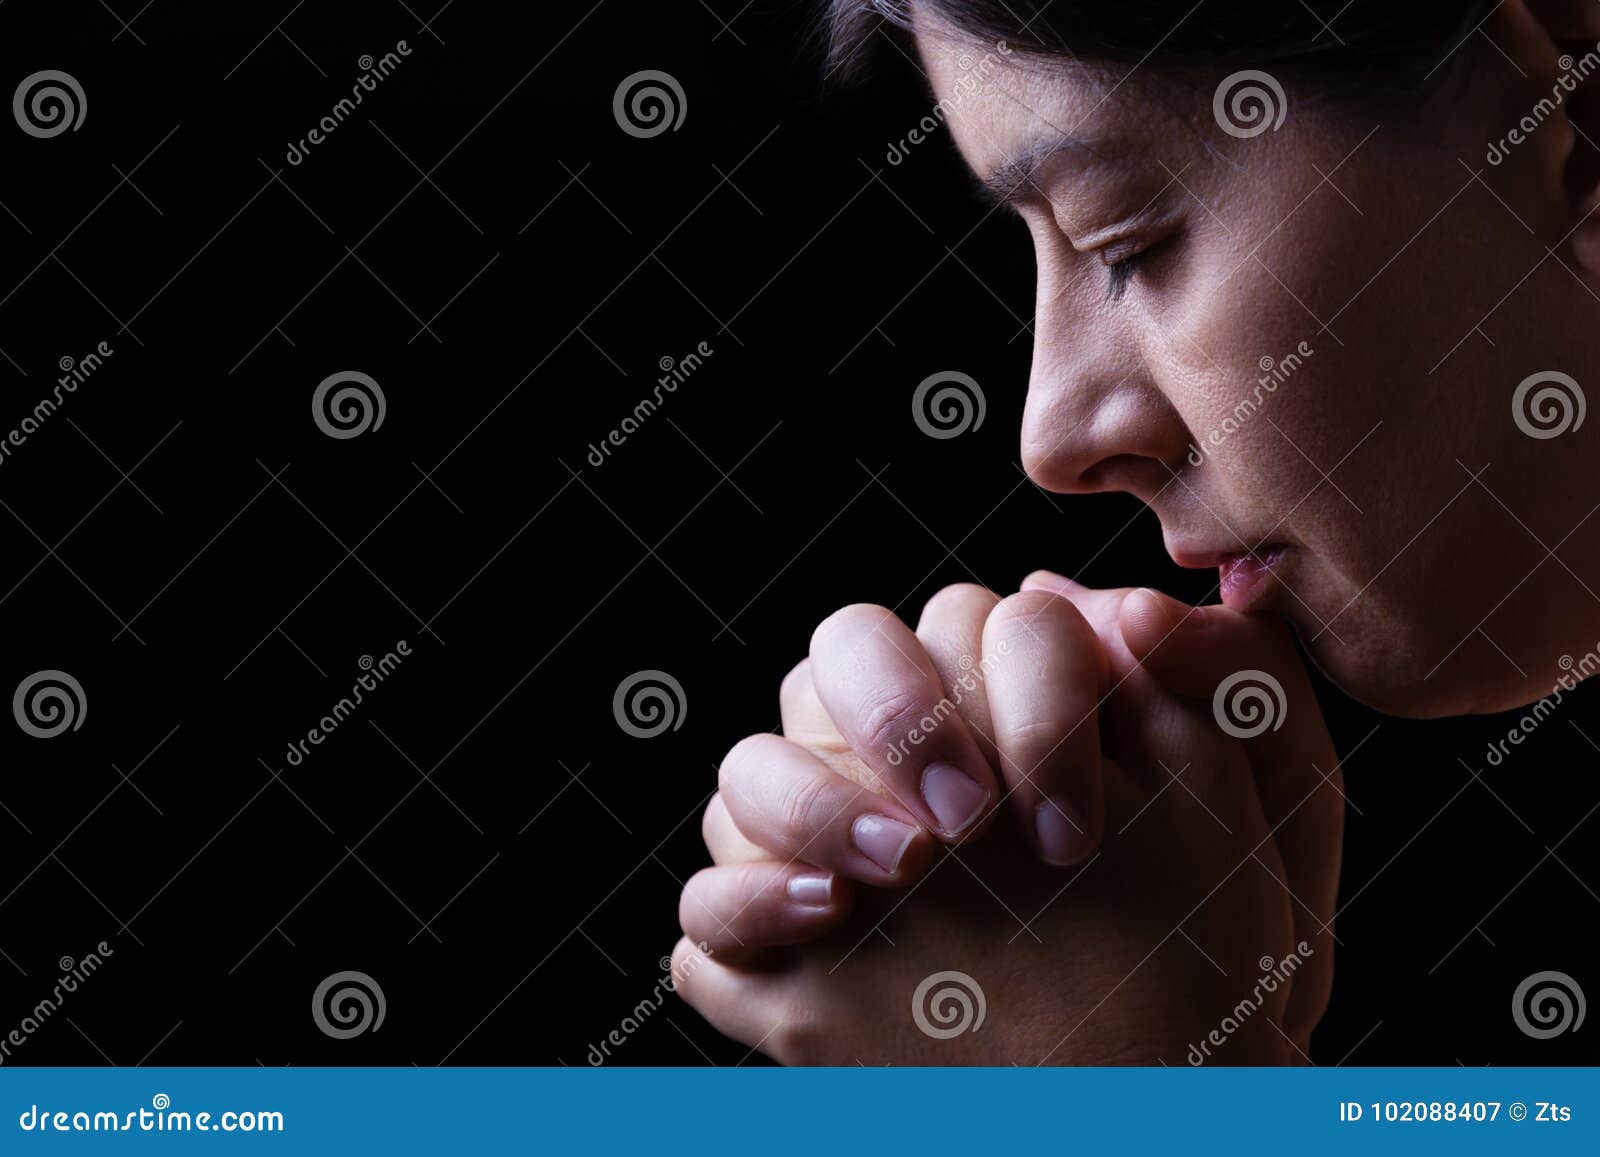 faithful woman praying, hands folded in worship to god